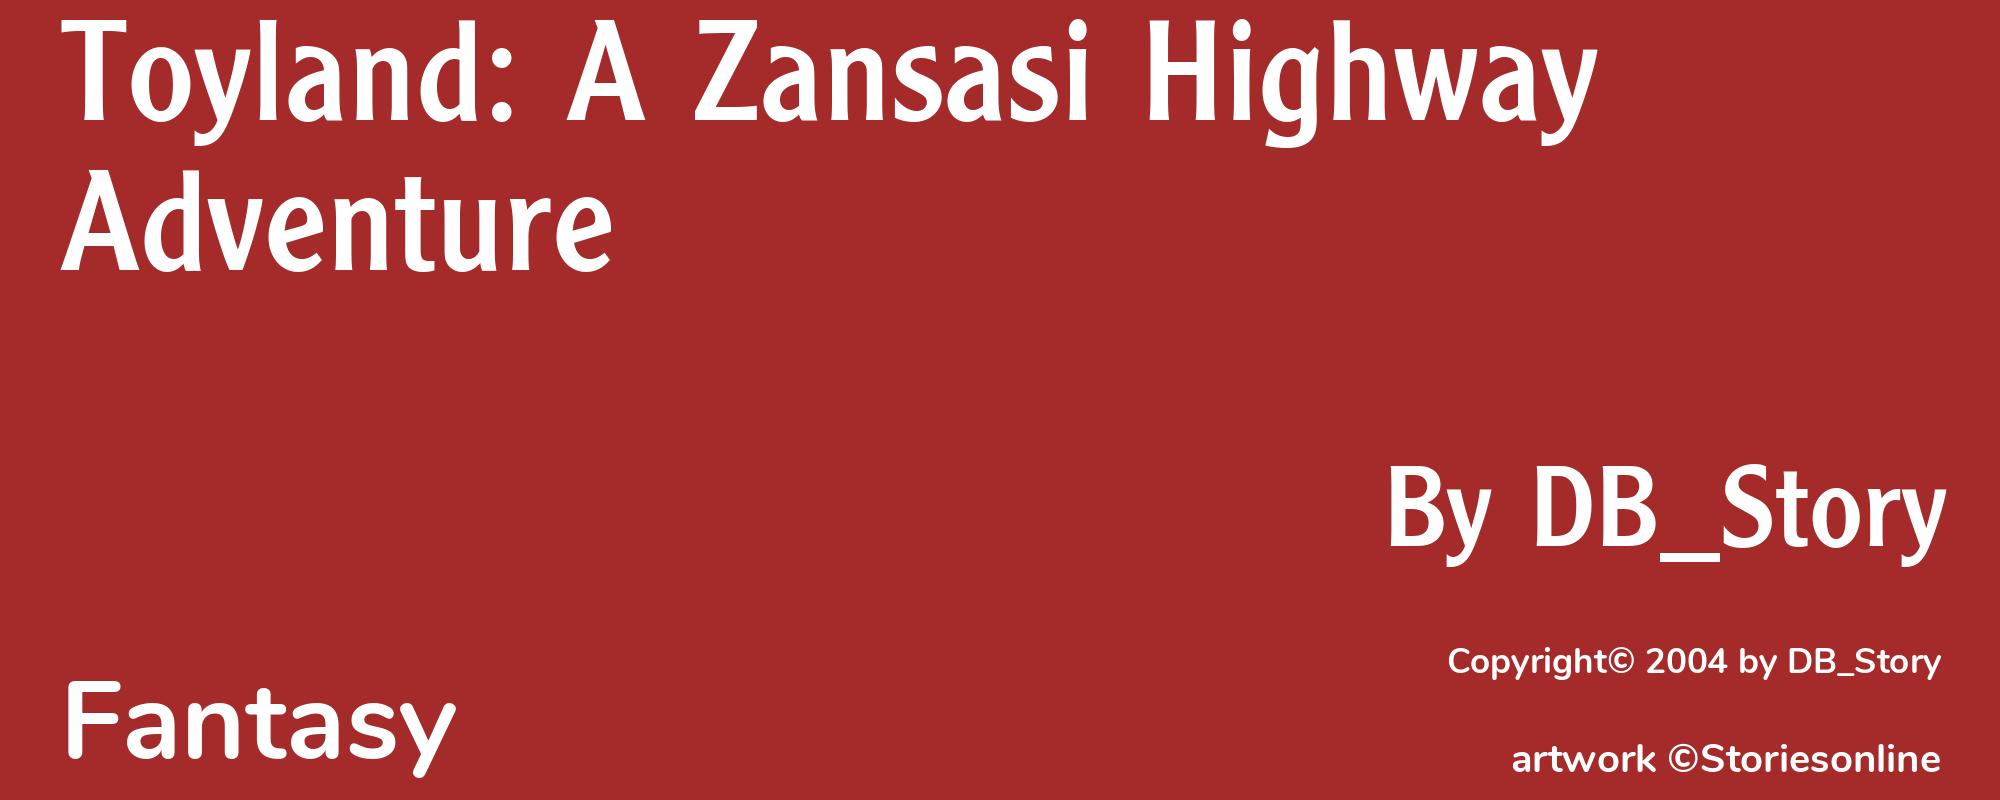 Toyland: A Zansasi Highway Adventure - Cover